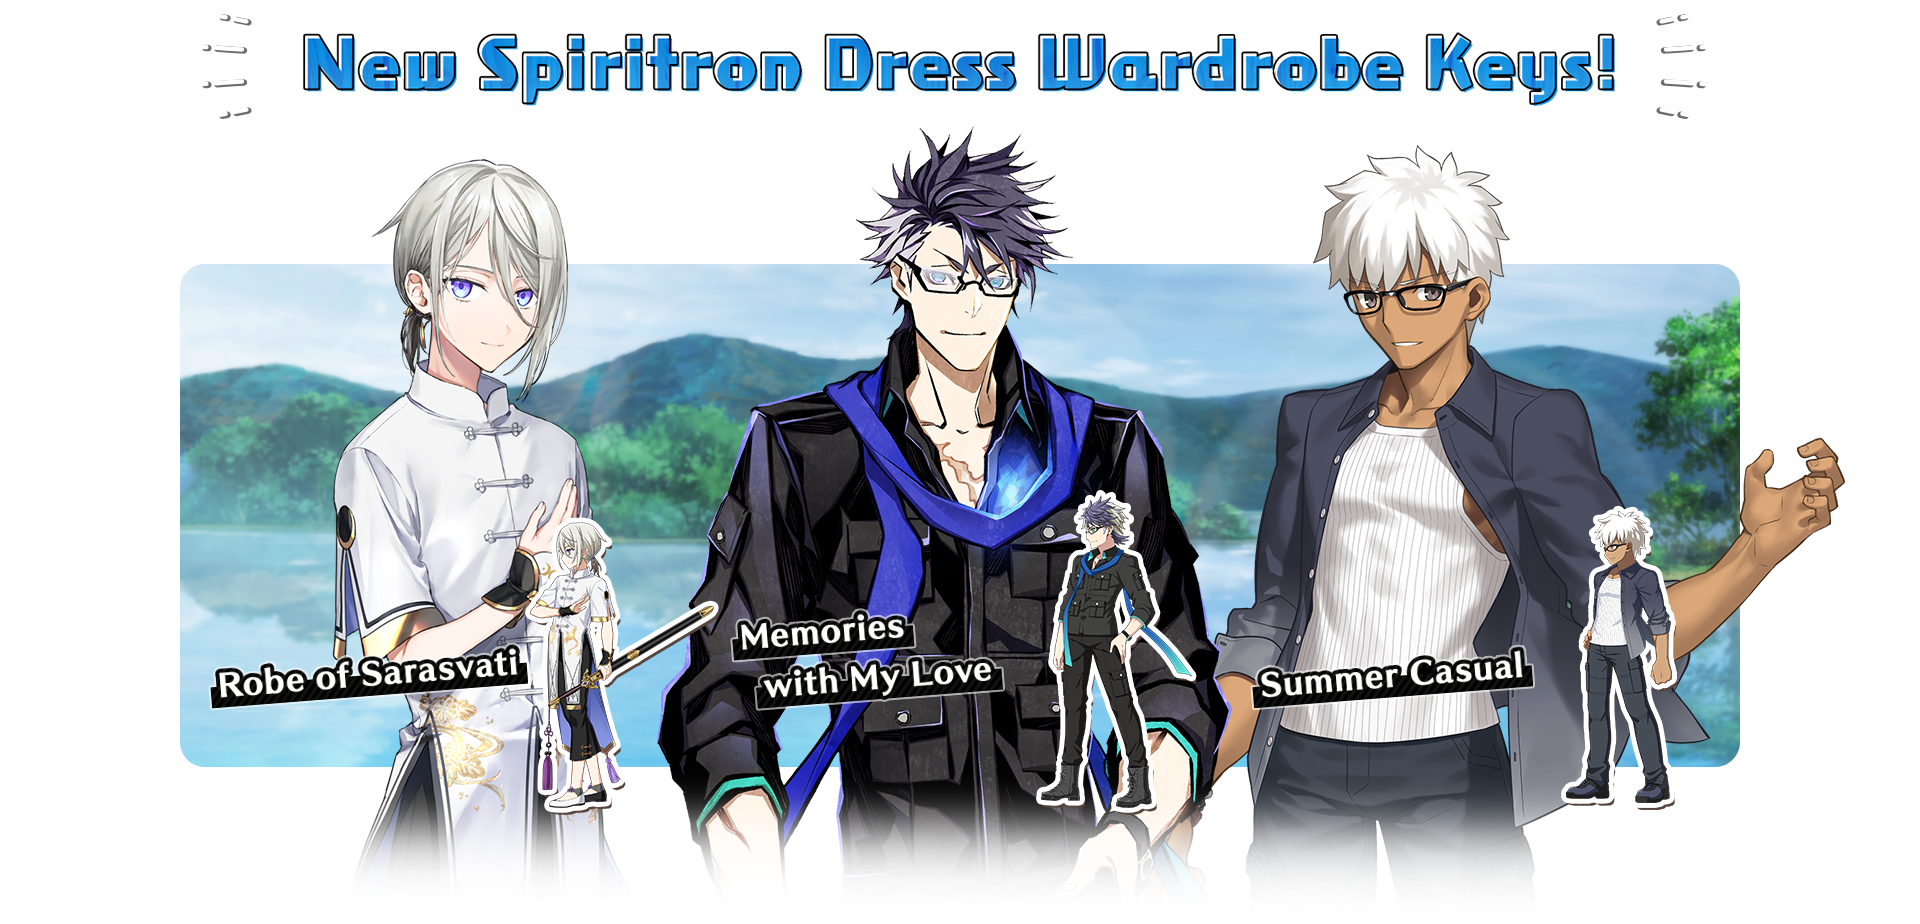 New Spiritron Dress Wardrobe Keys!